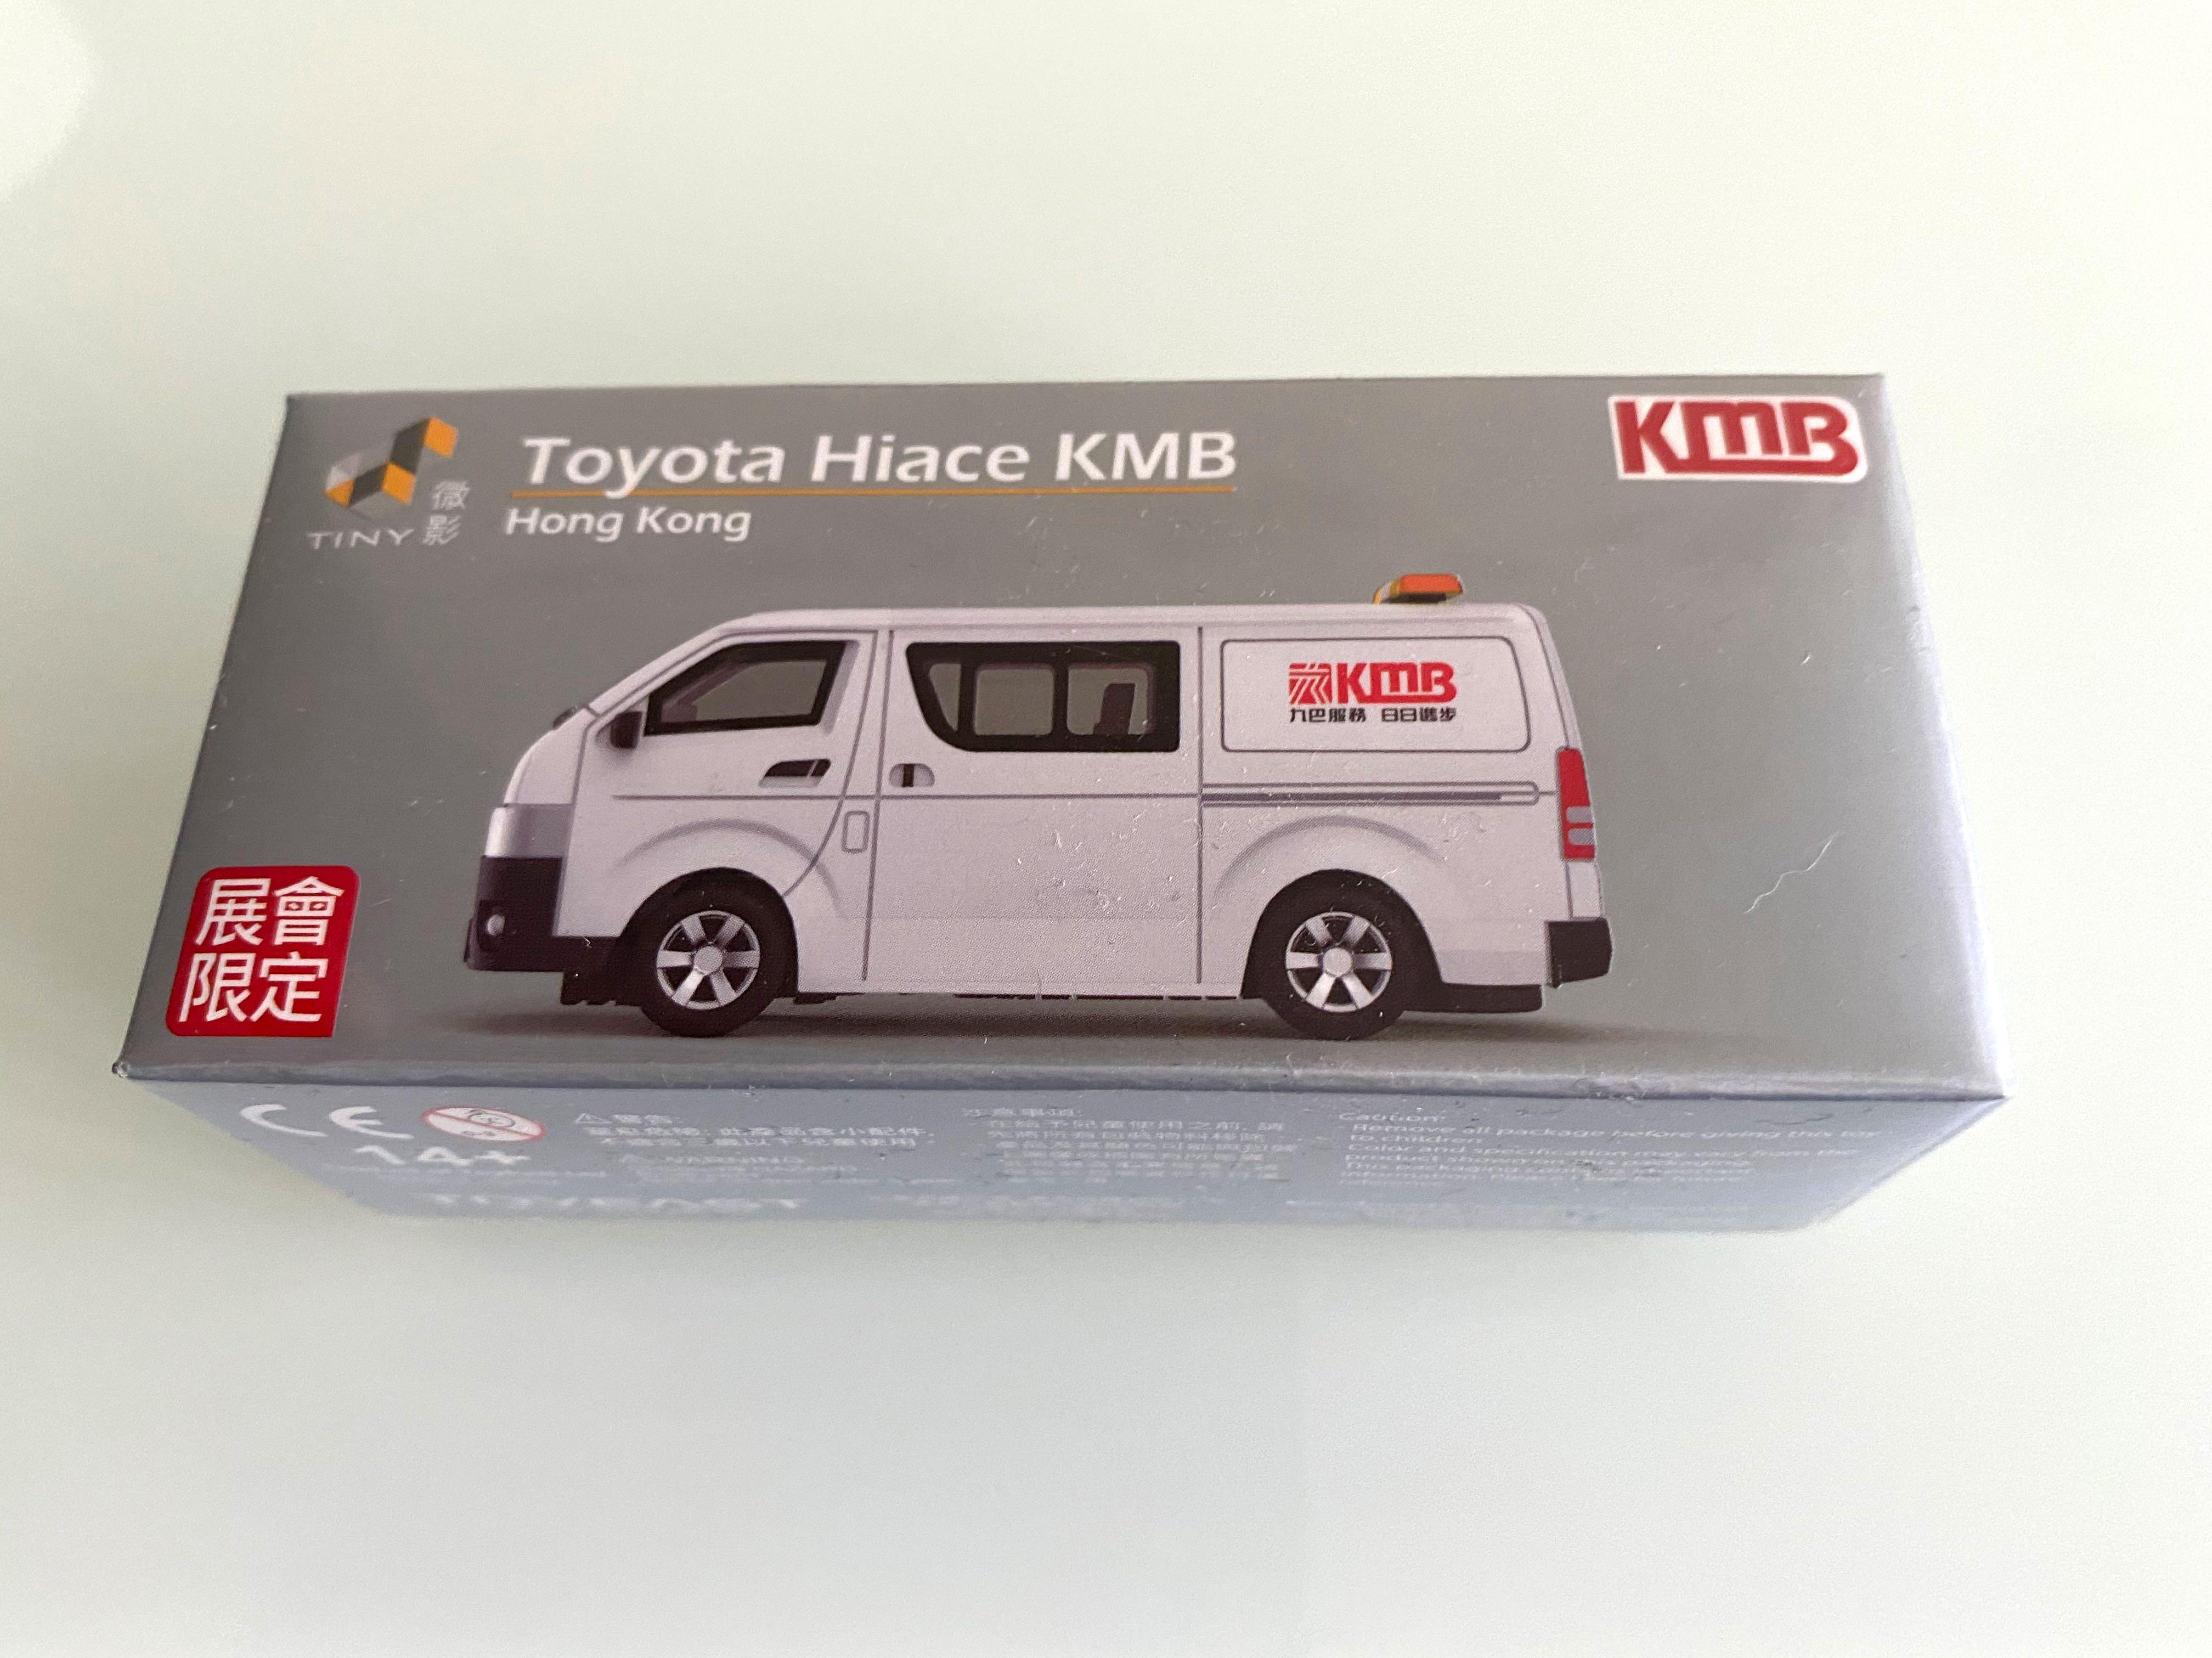 Tiny 微影展會限定Toyota Hiace KMB 全新